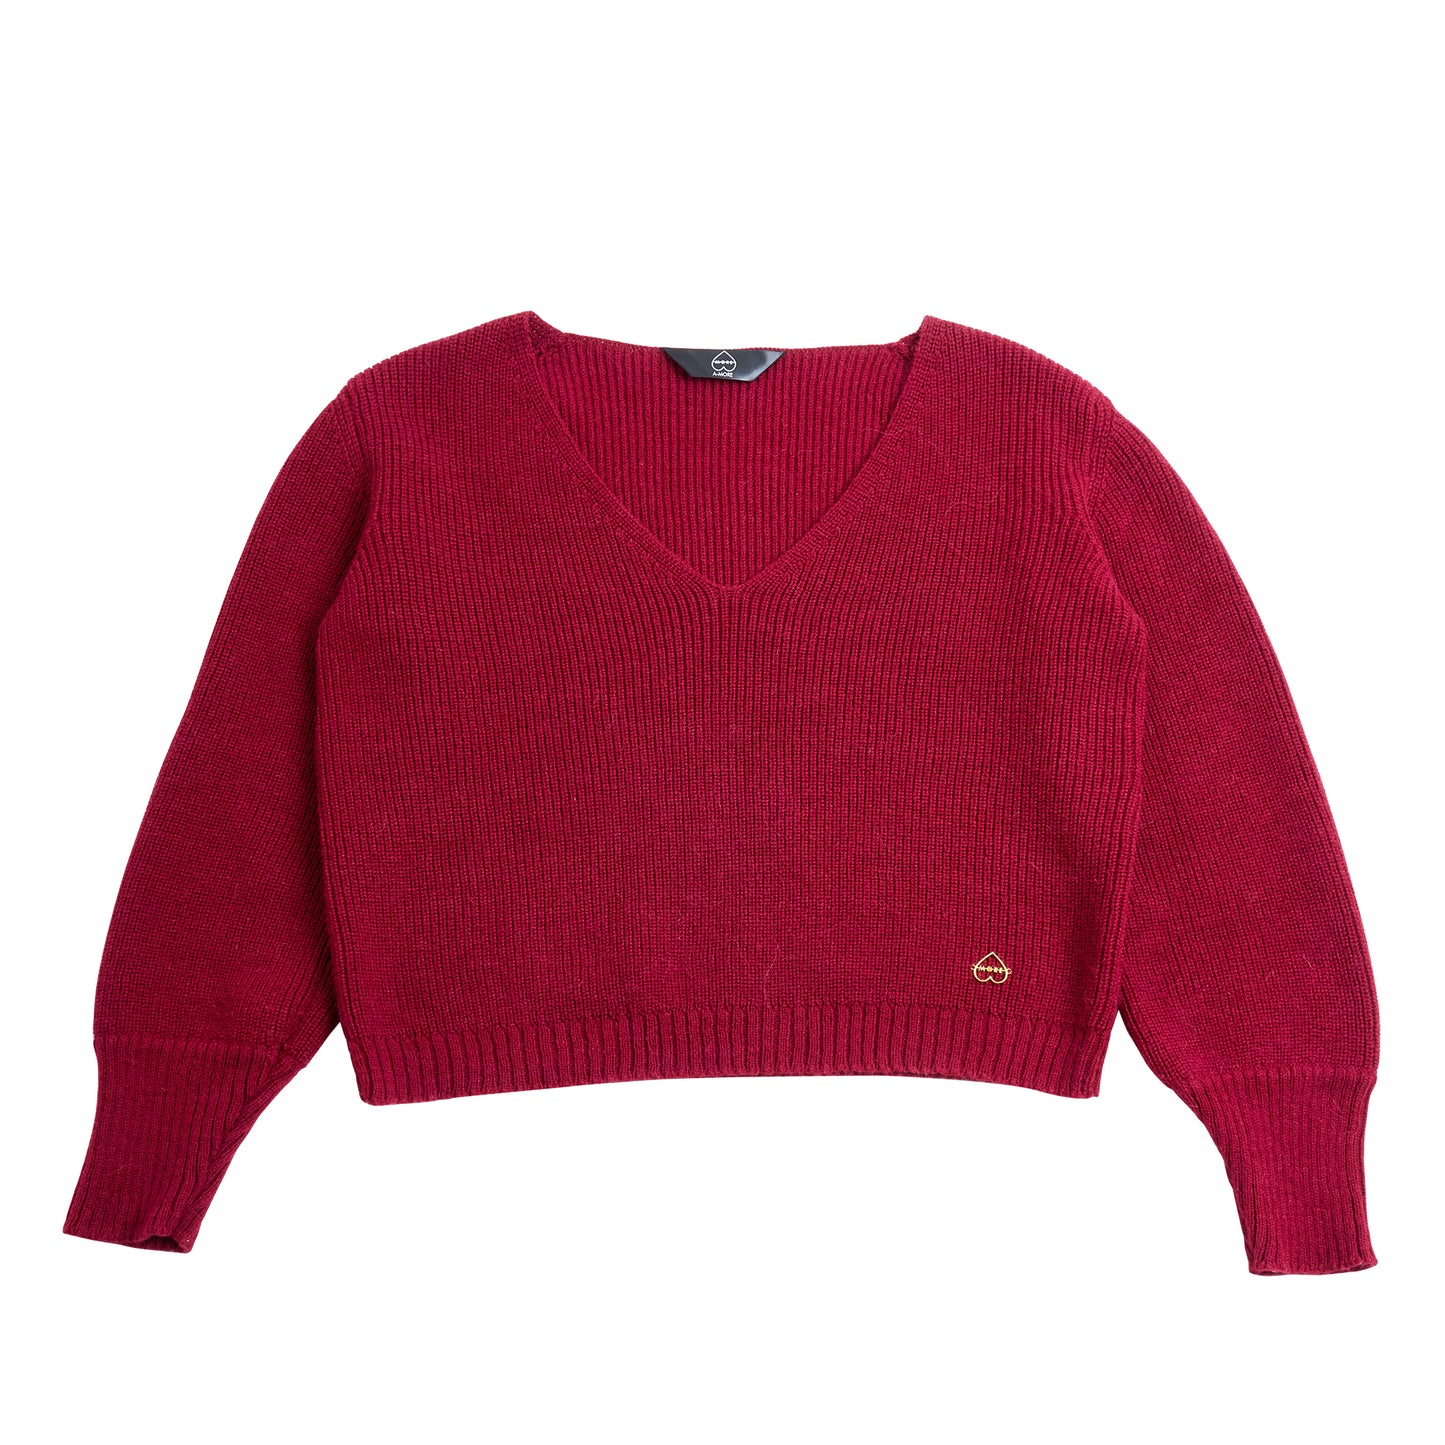 A-MORE Linda - Sweater